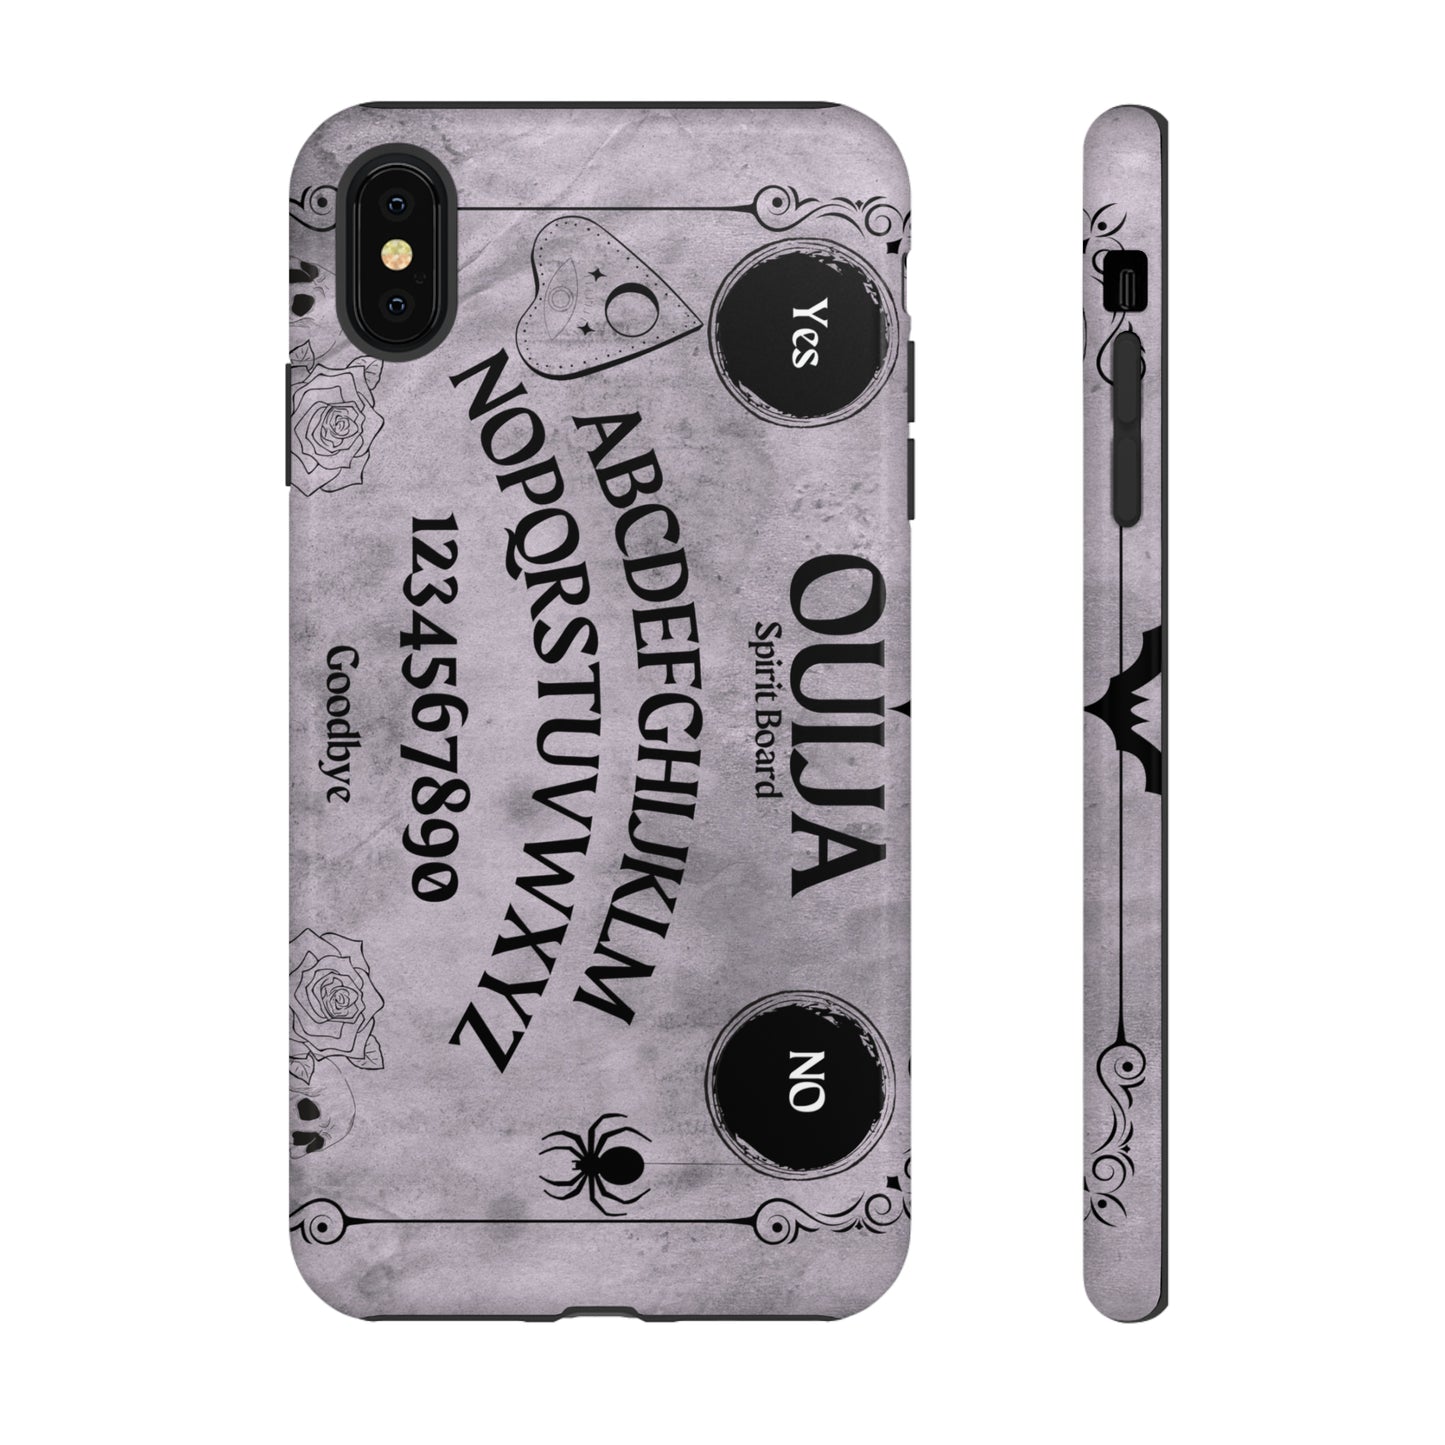 Ouija Board Tough Phone Cases For Samsung iPhone GooglePhone CaseVTZdesignsiPhone XS MAXGlossyAccessoriesGlossyhalloween